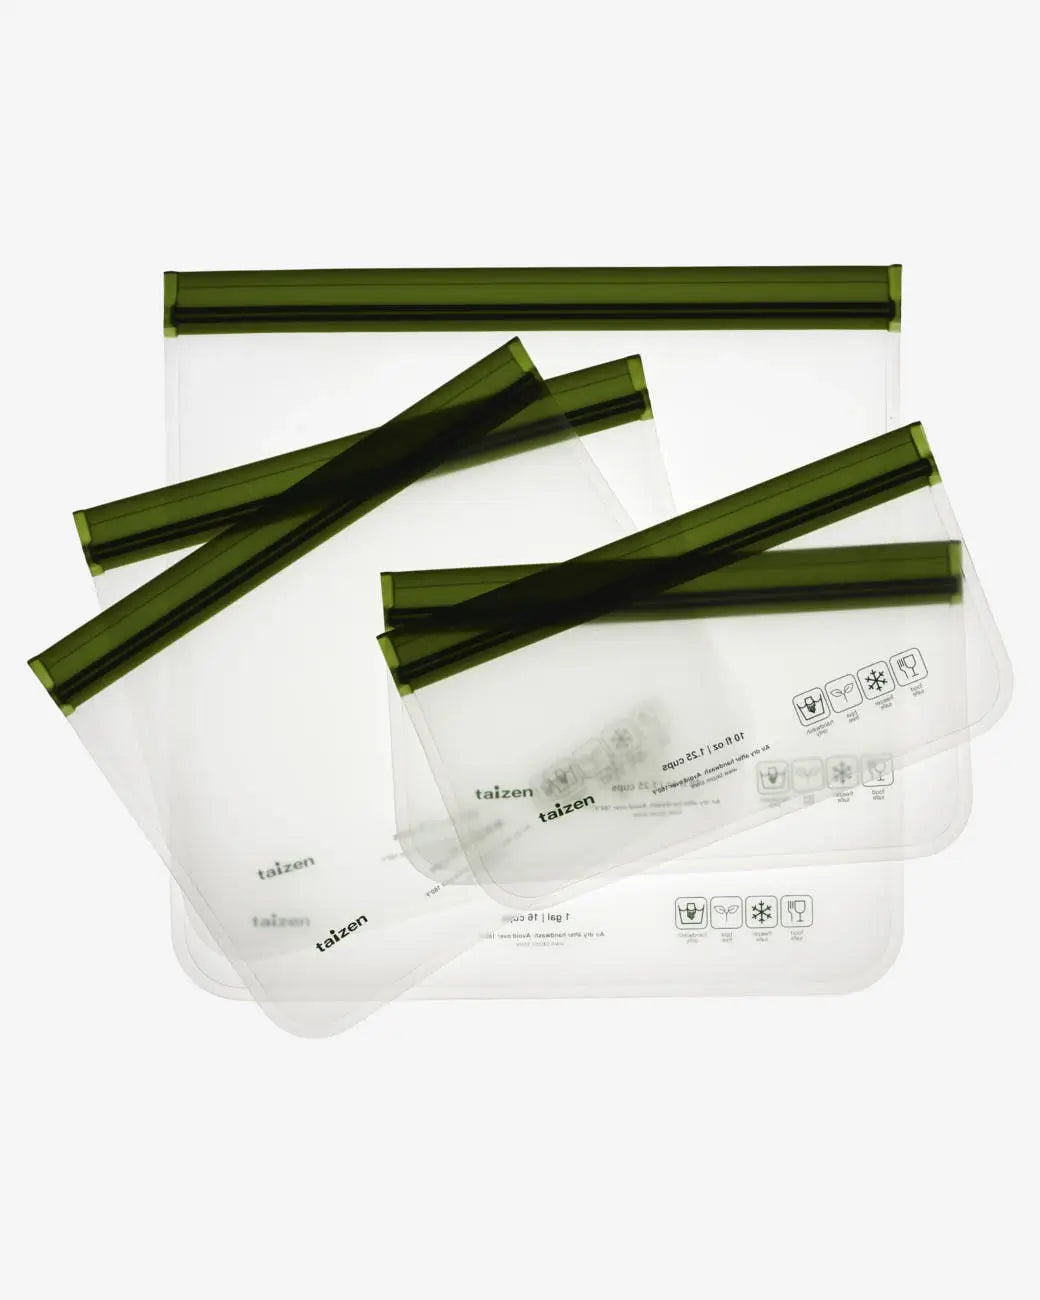 Taizen Reuseable Zip bag- set of 5